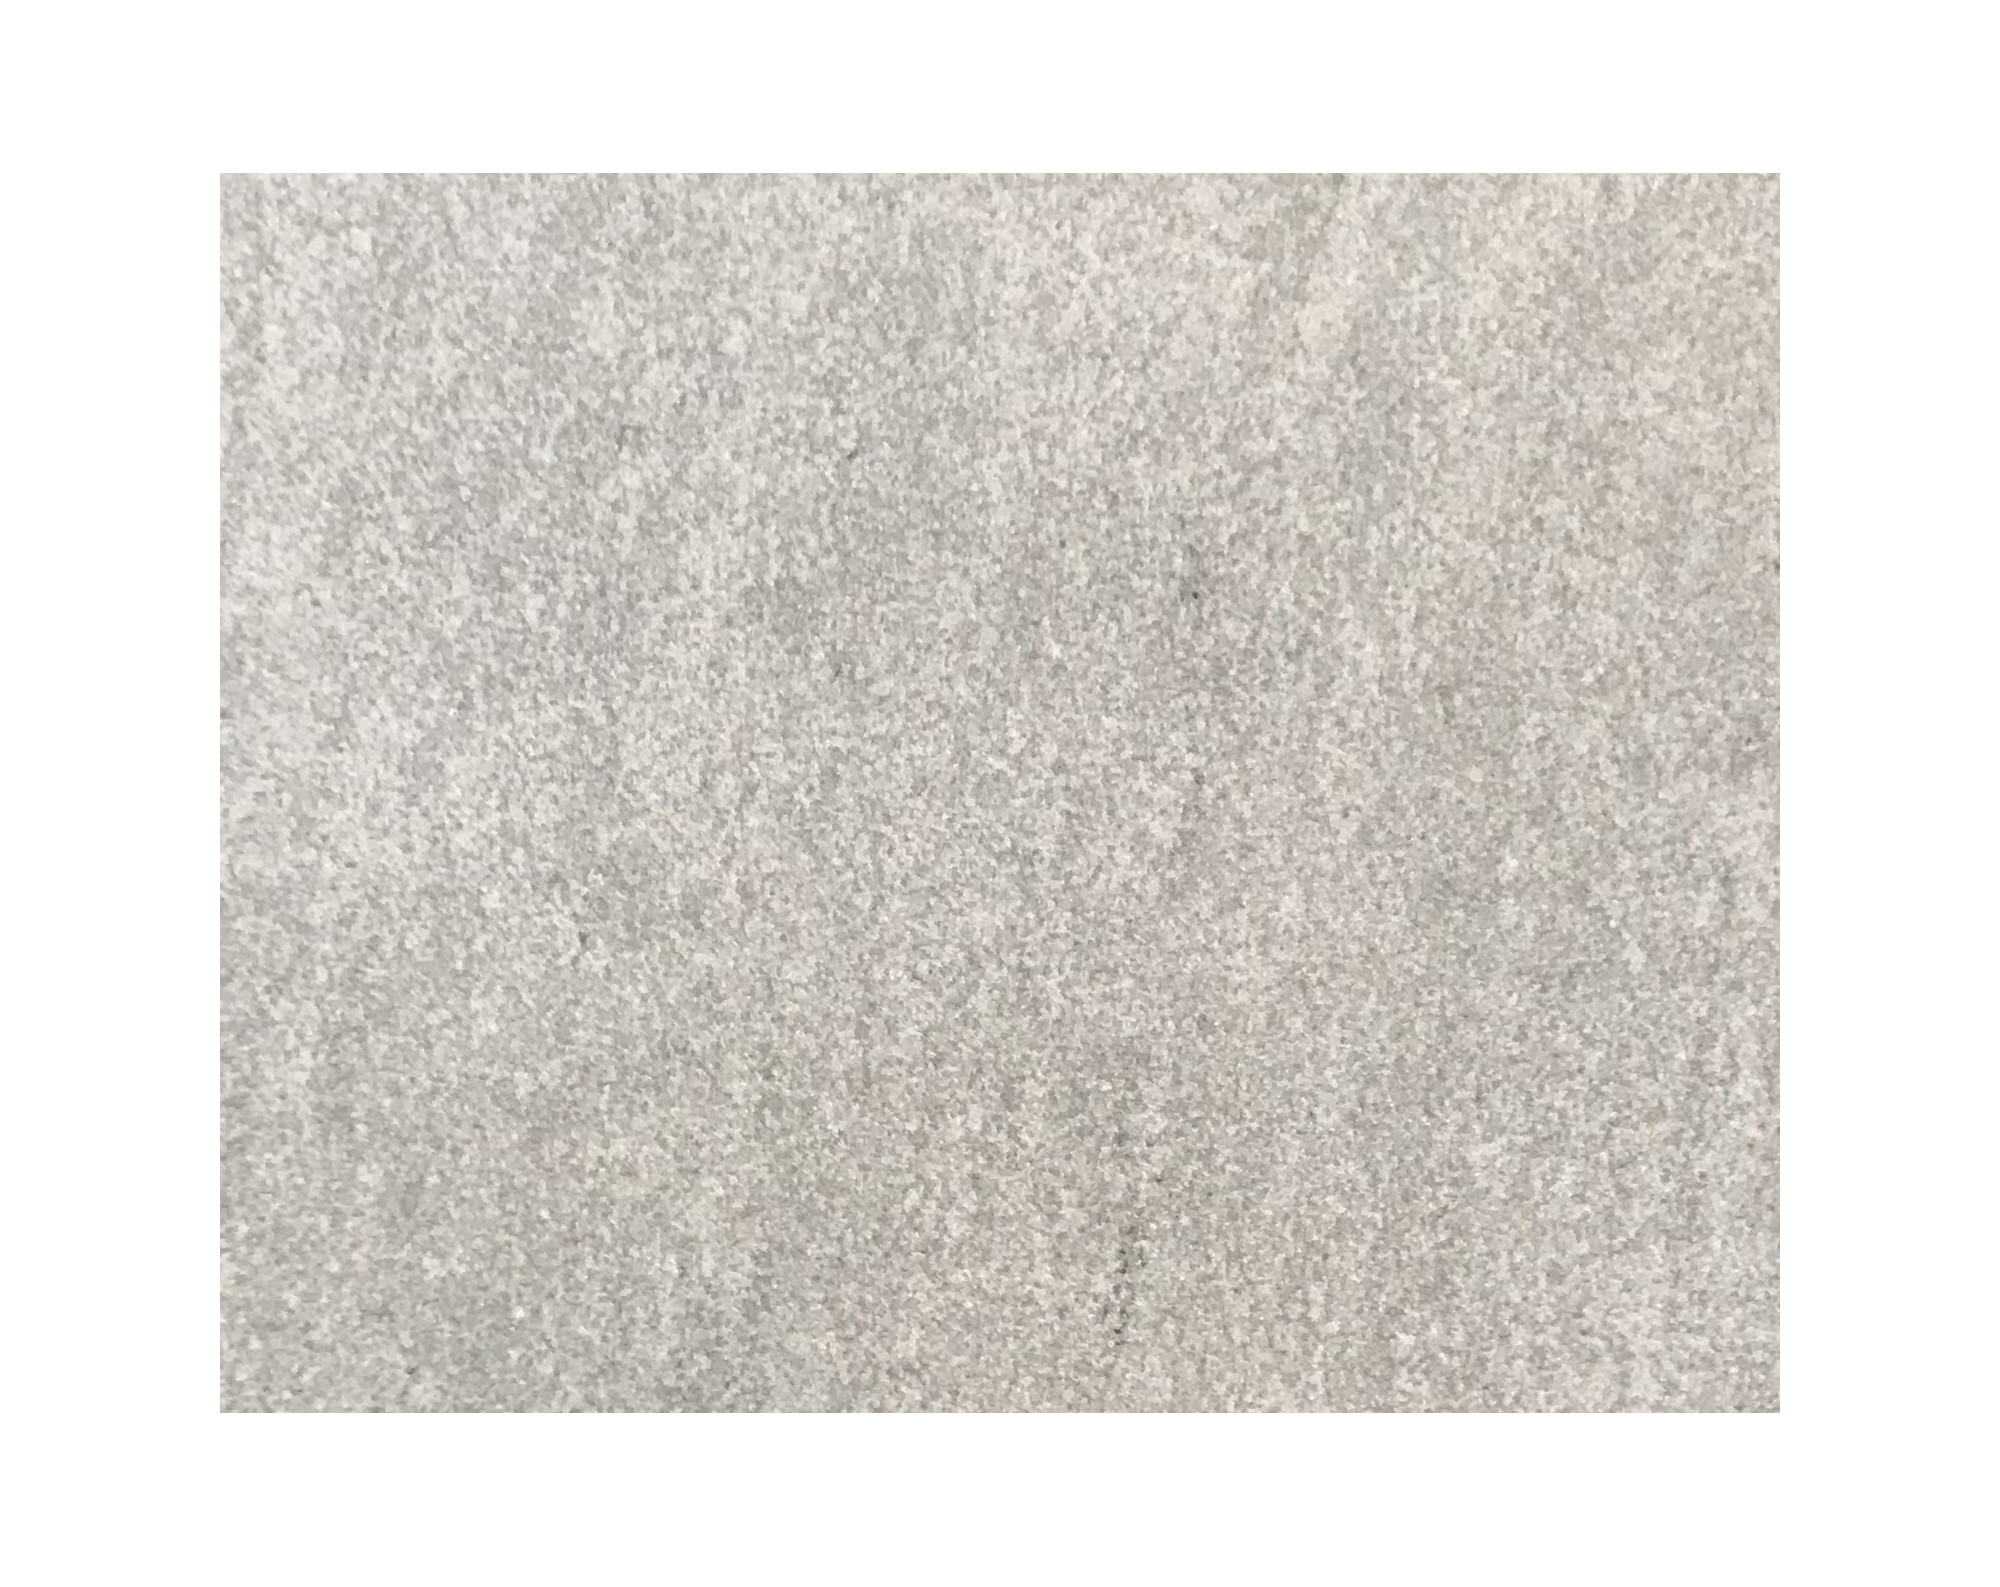 Harmo roc maranelloset, keramiek-serie, ovaal d: 3,50mx7,50m, zand grijs, keramisch porselein